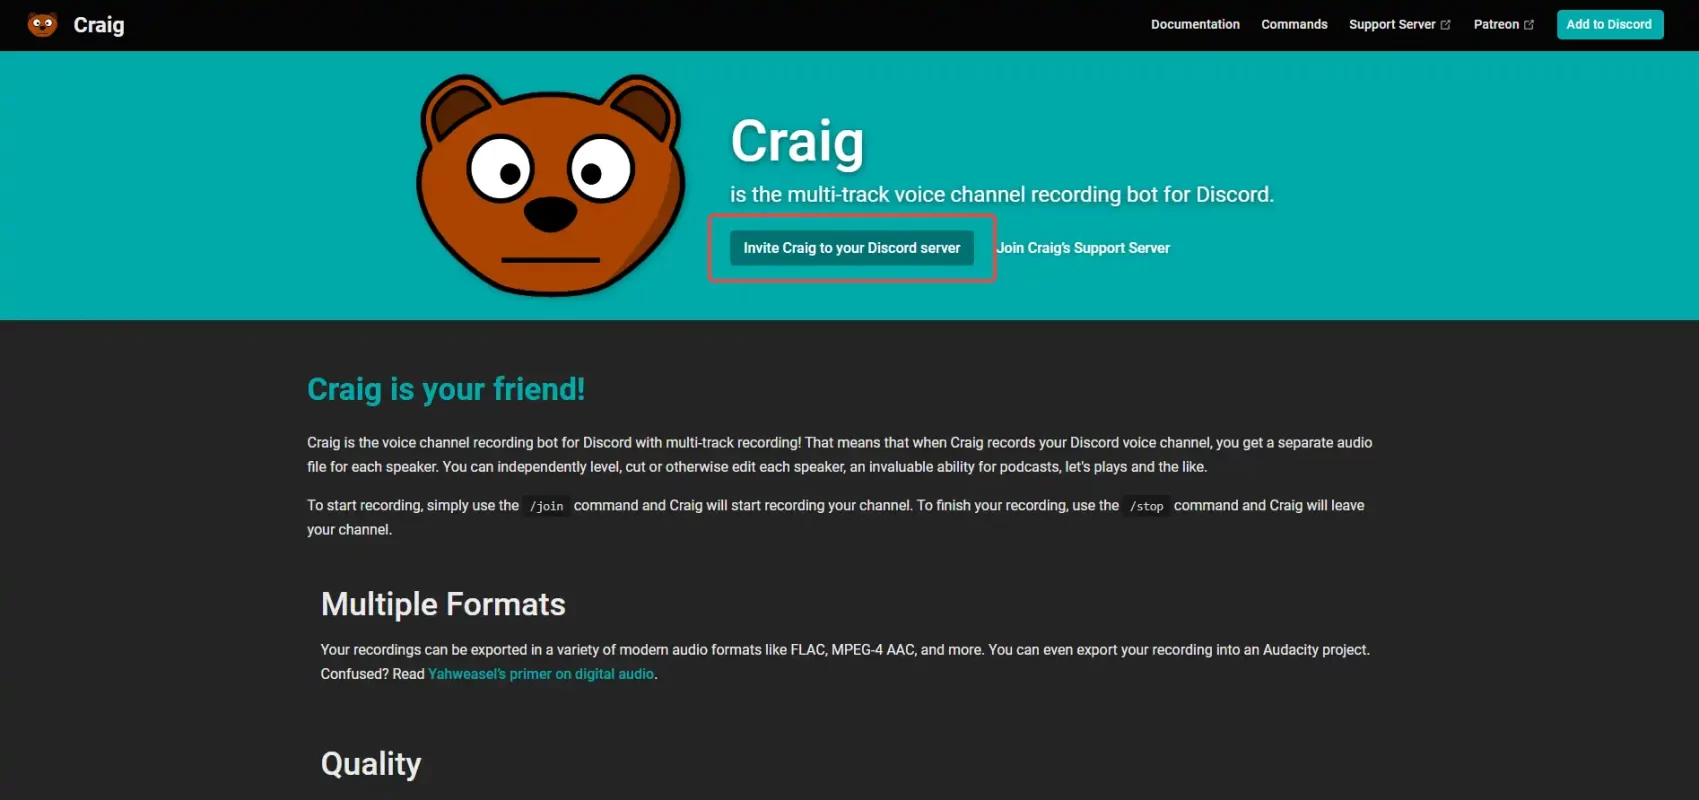 Click Invite Craig to your Discord server.